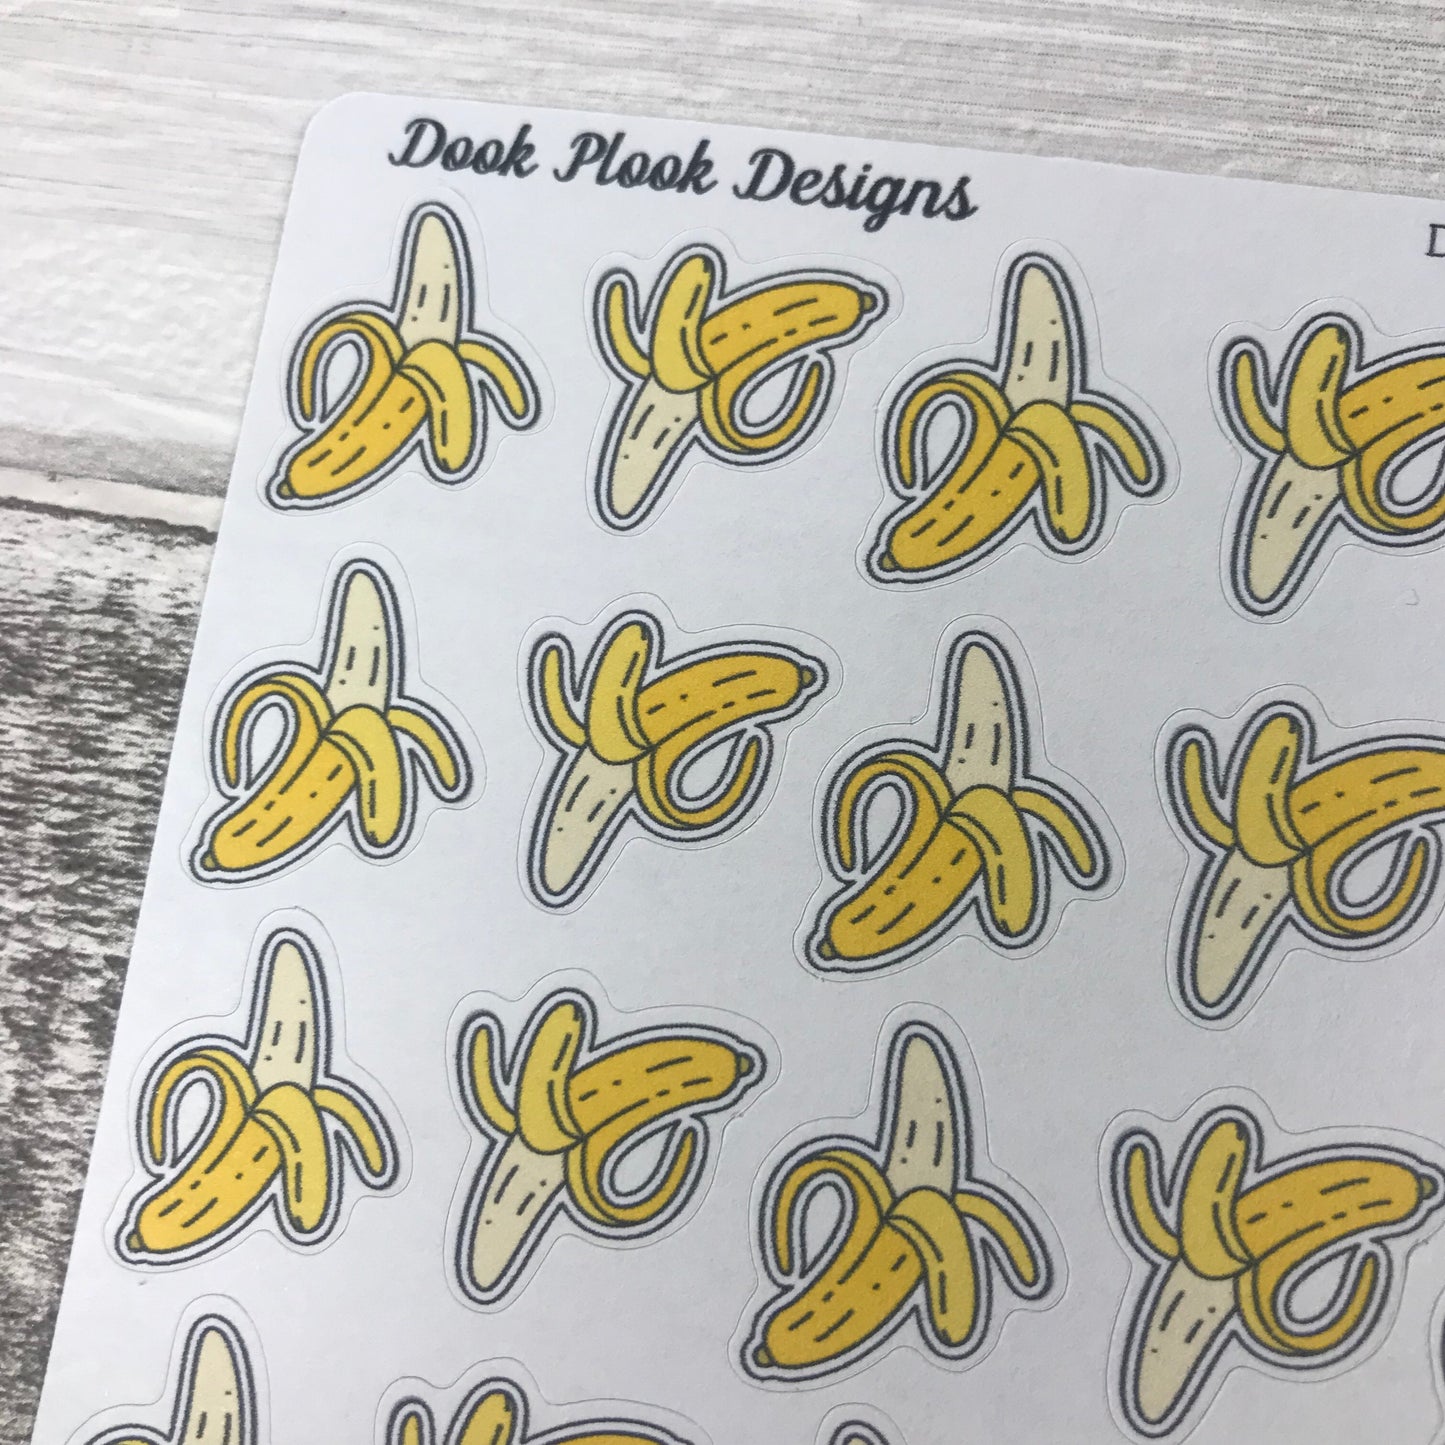 Banana stickers (DPD932)